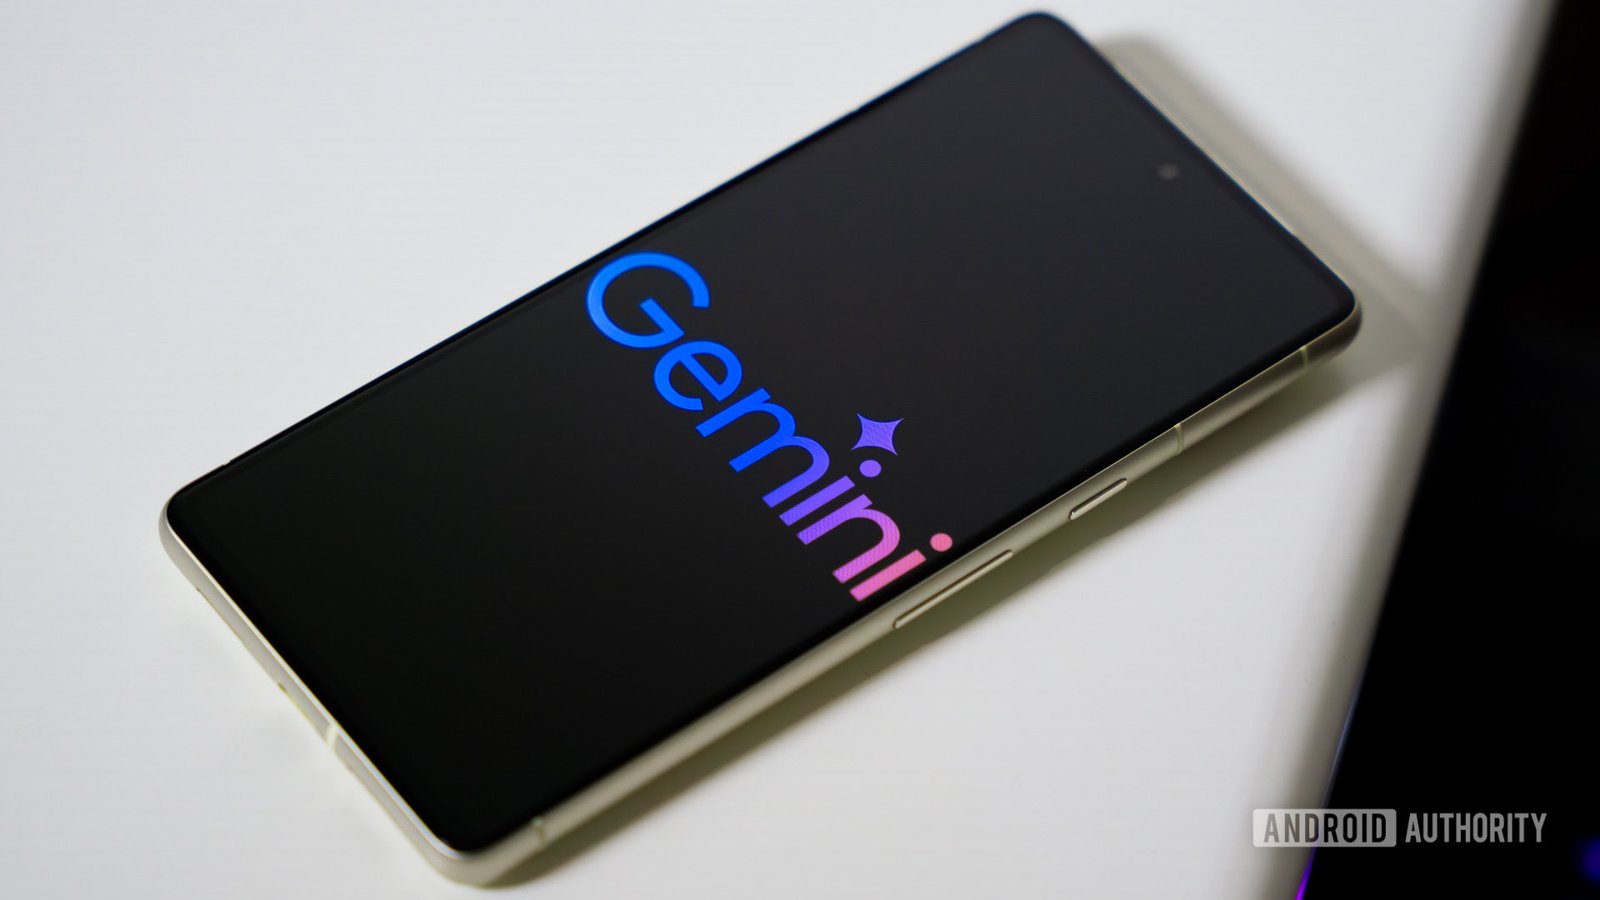 Apple confirms it wants Google Gemini on iPhones